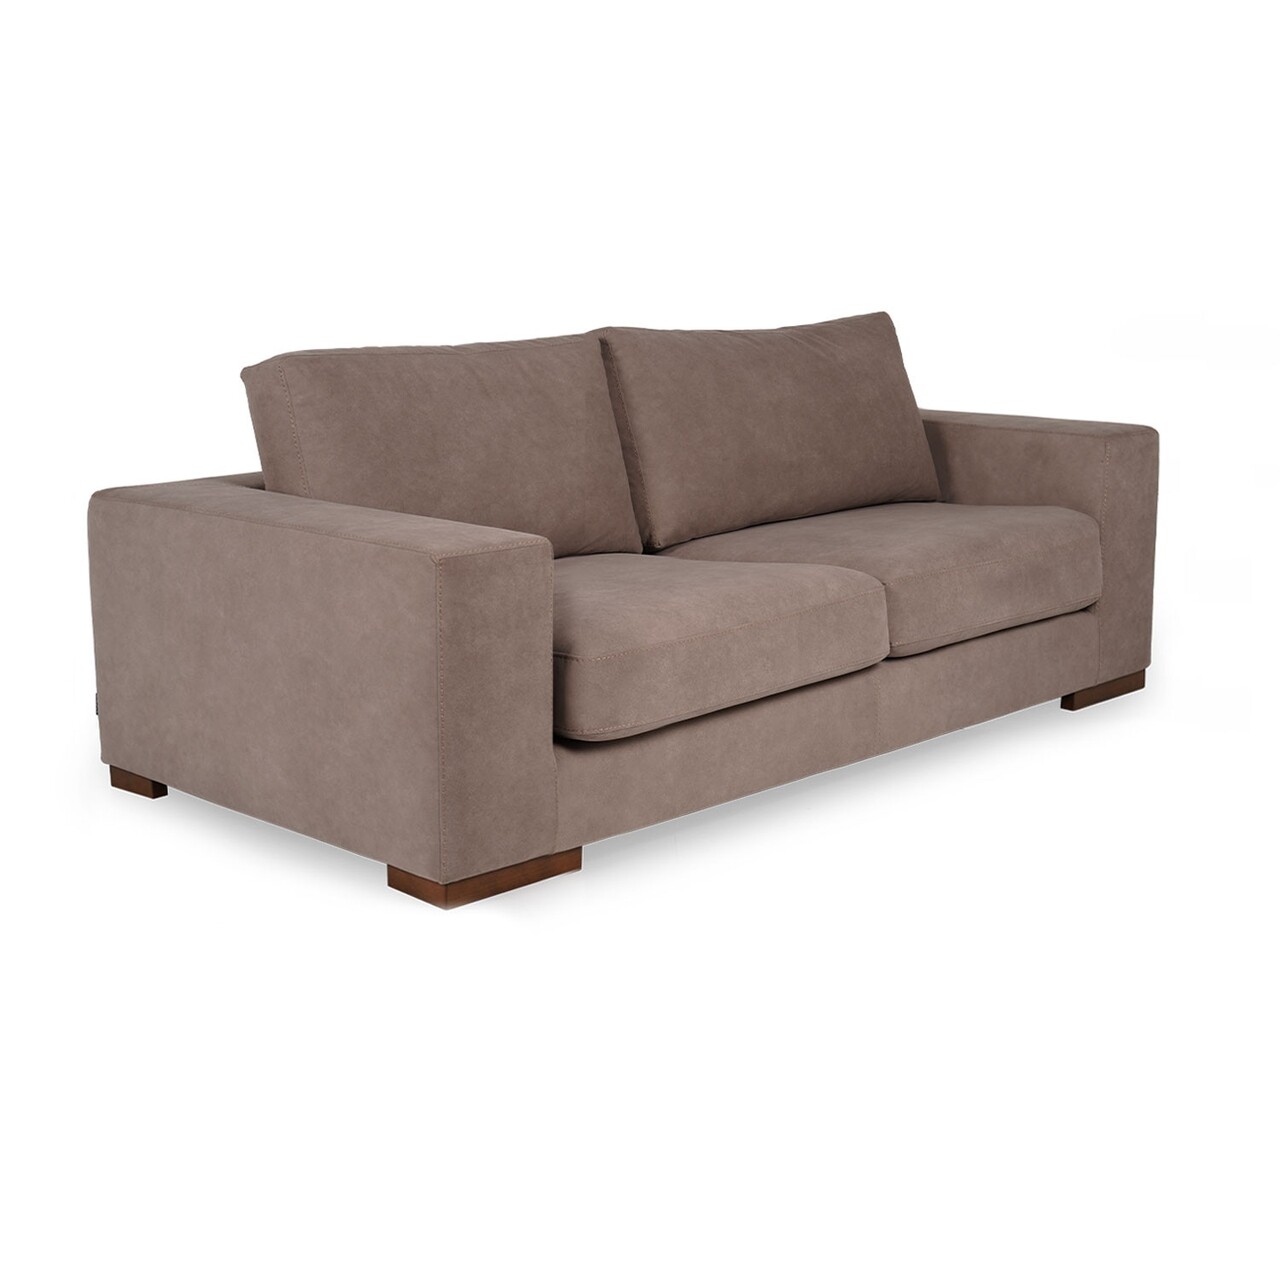 Newplus kanapé, ndesign, 2 locuri, 204x102x80 cm, fa, barna